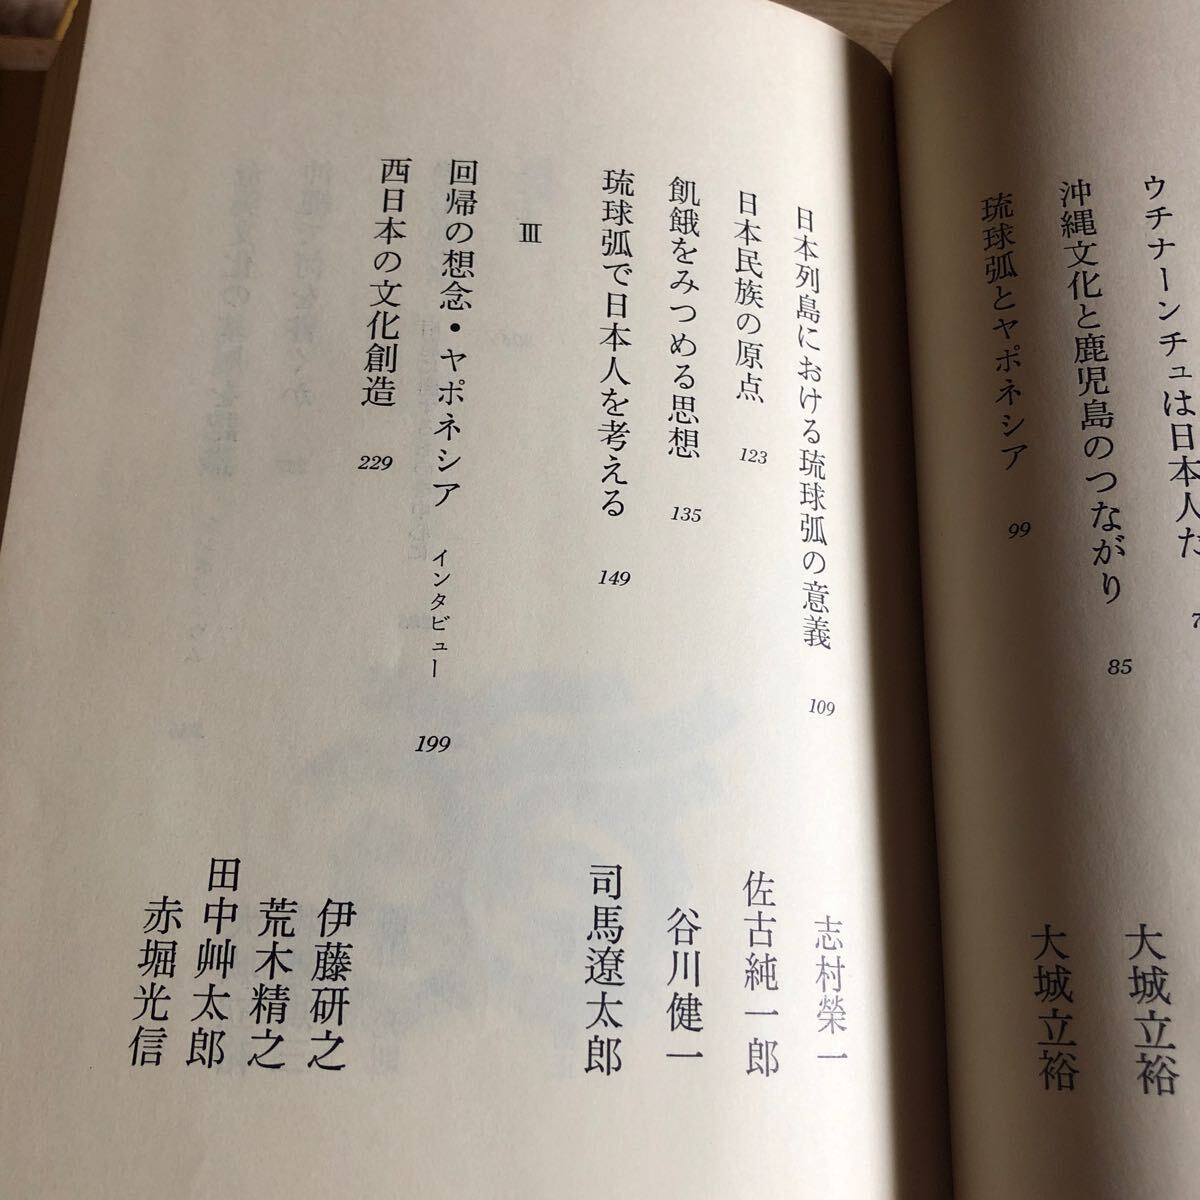 yaponesia. Shimao Toshio на . сборник Showa 52 год первая версия клик post отправка 